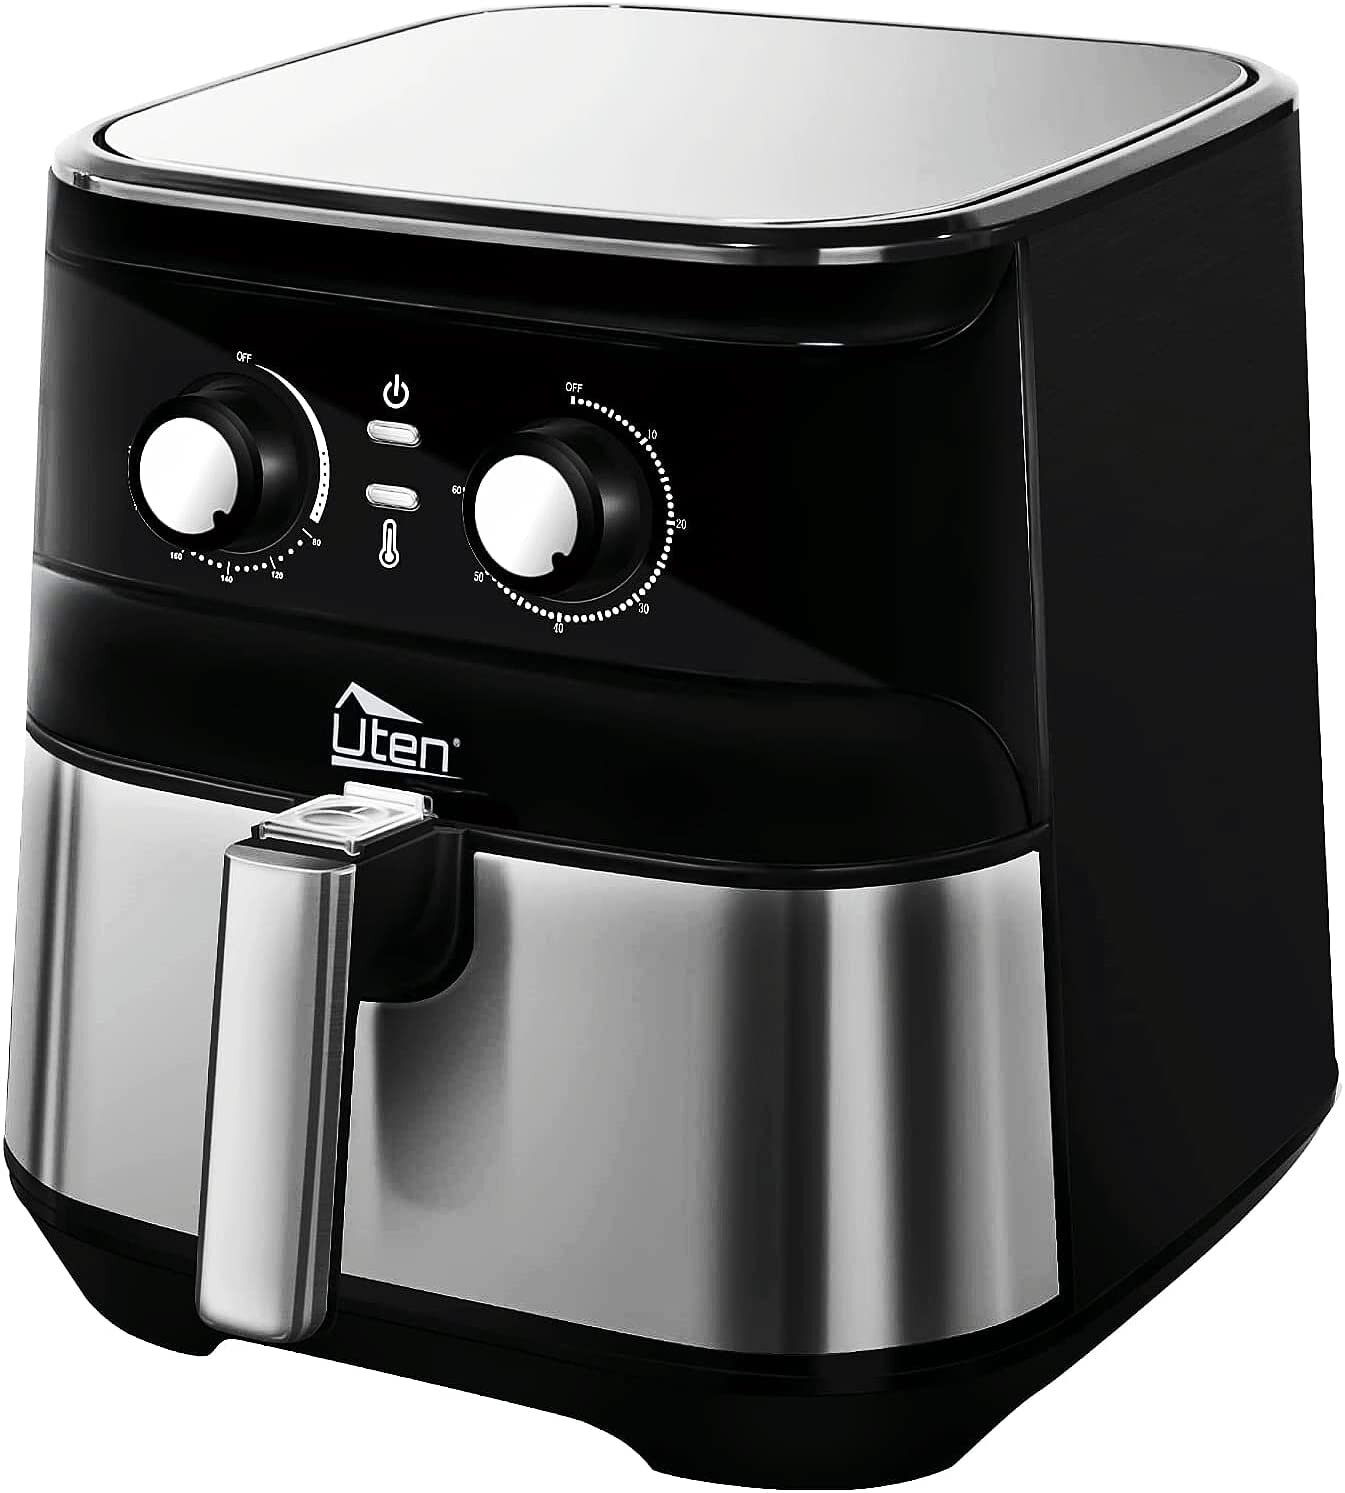 Ninja air fryer xl 5.5 quart - appliances - by owner - sale